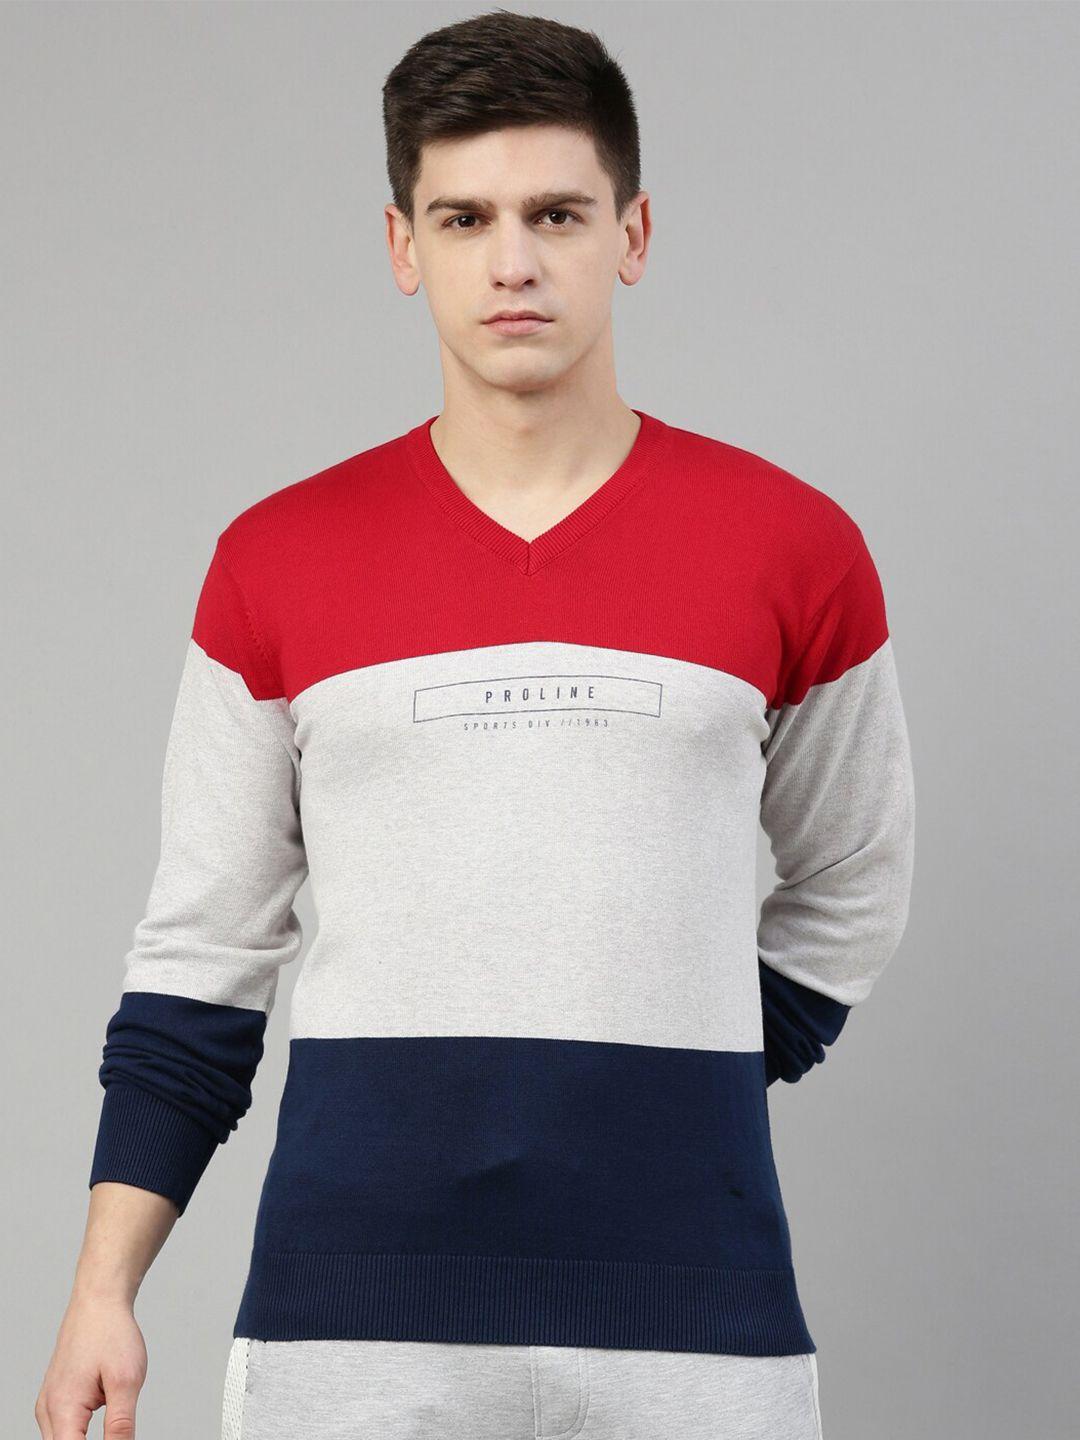 proline active men red & grey colourblocked pullover sweater